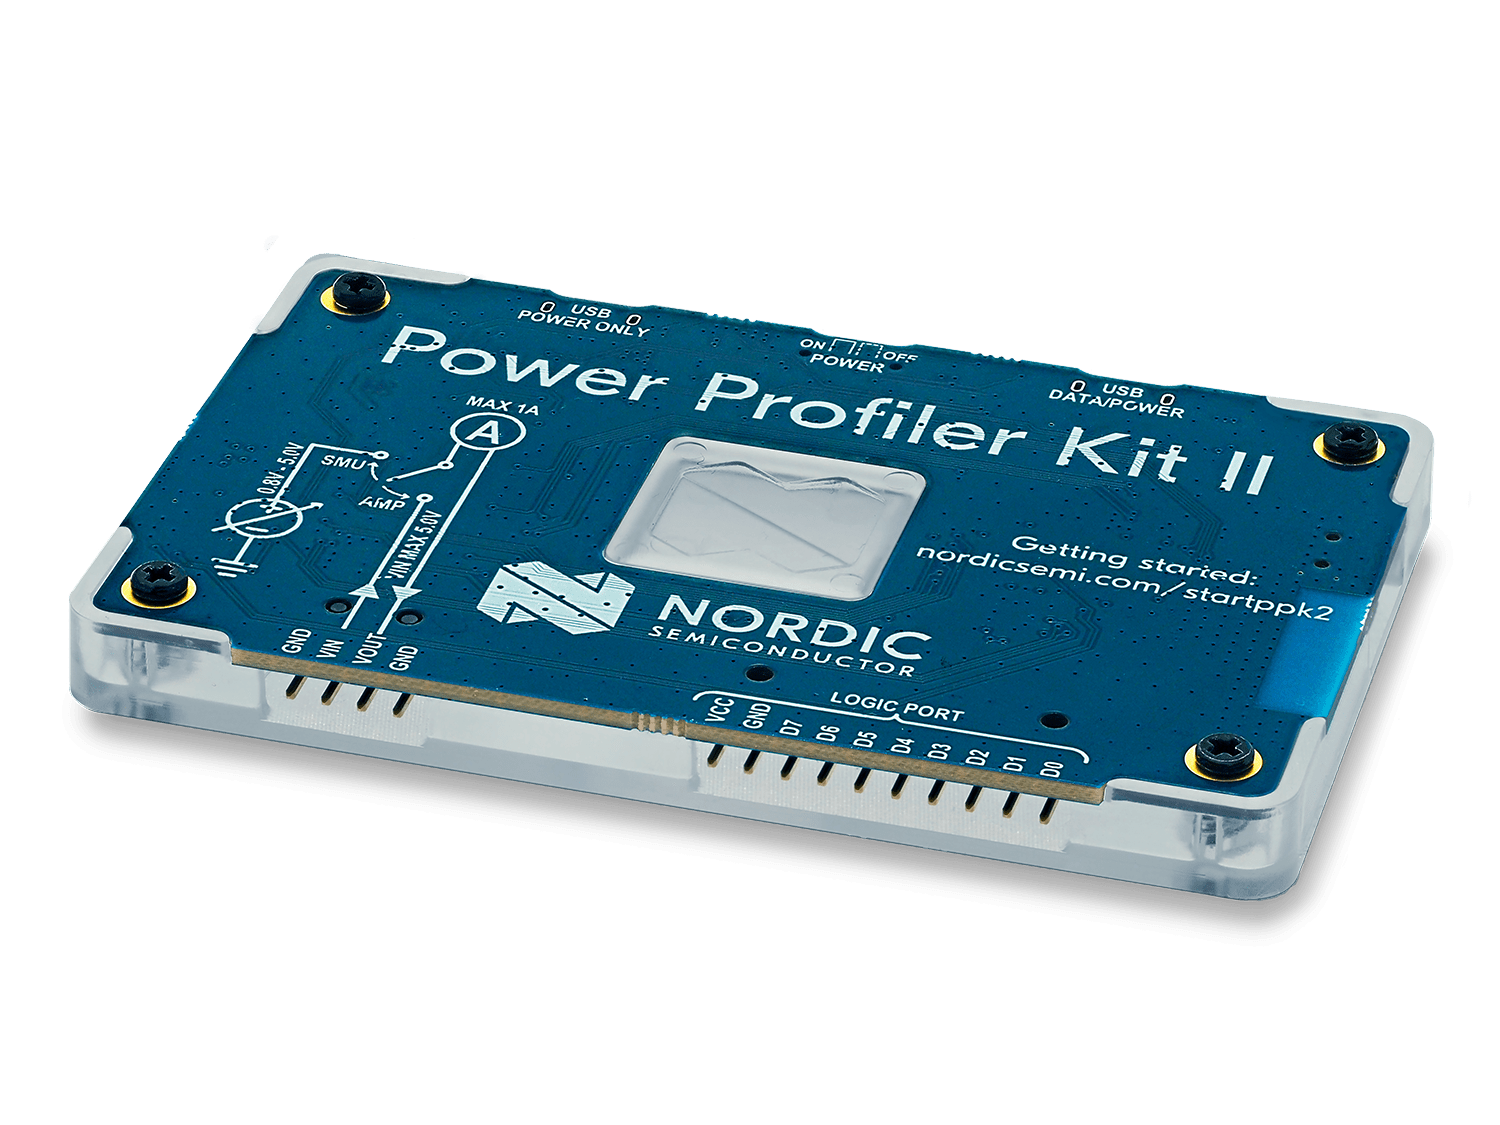 Power Profiler Kit II